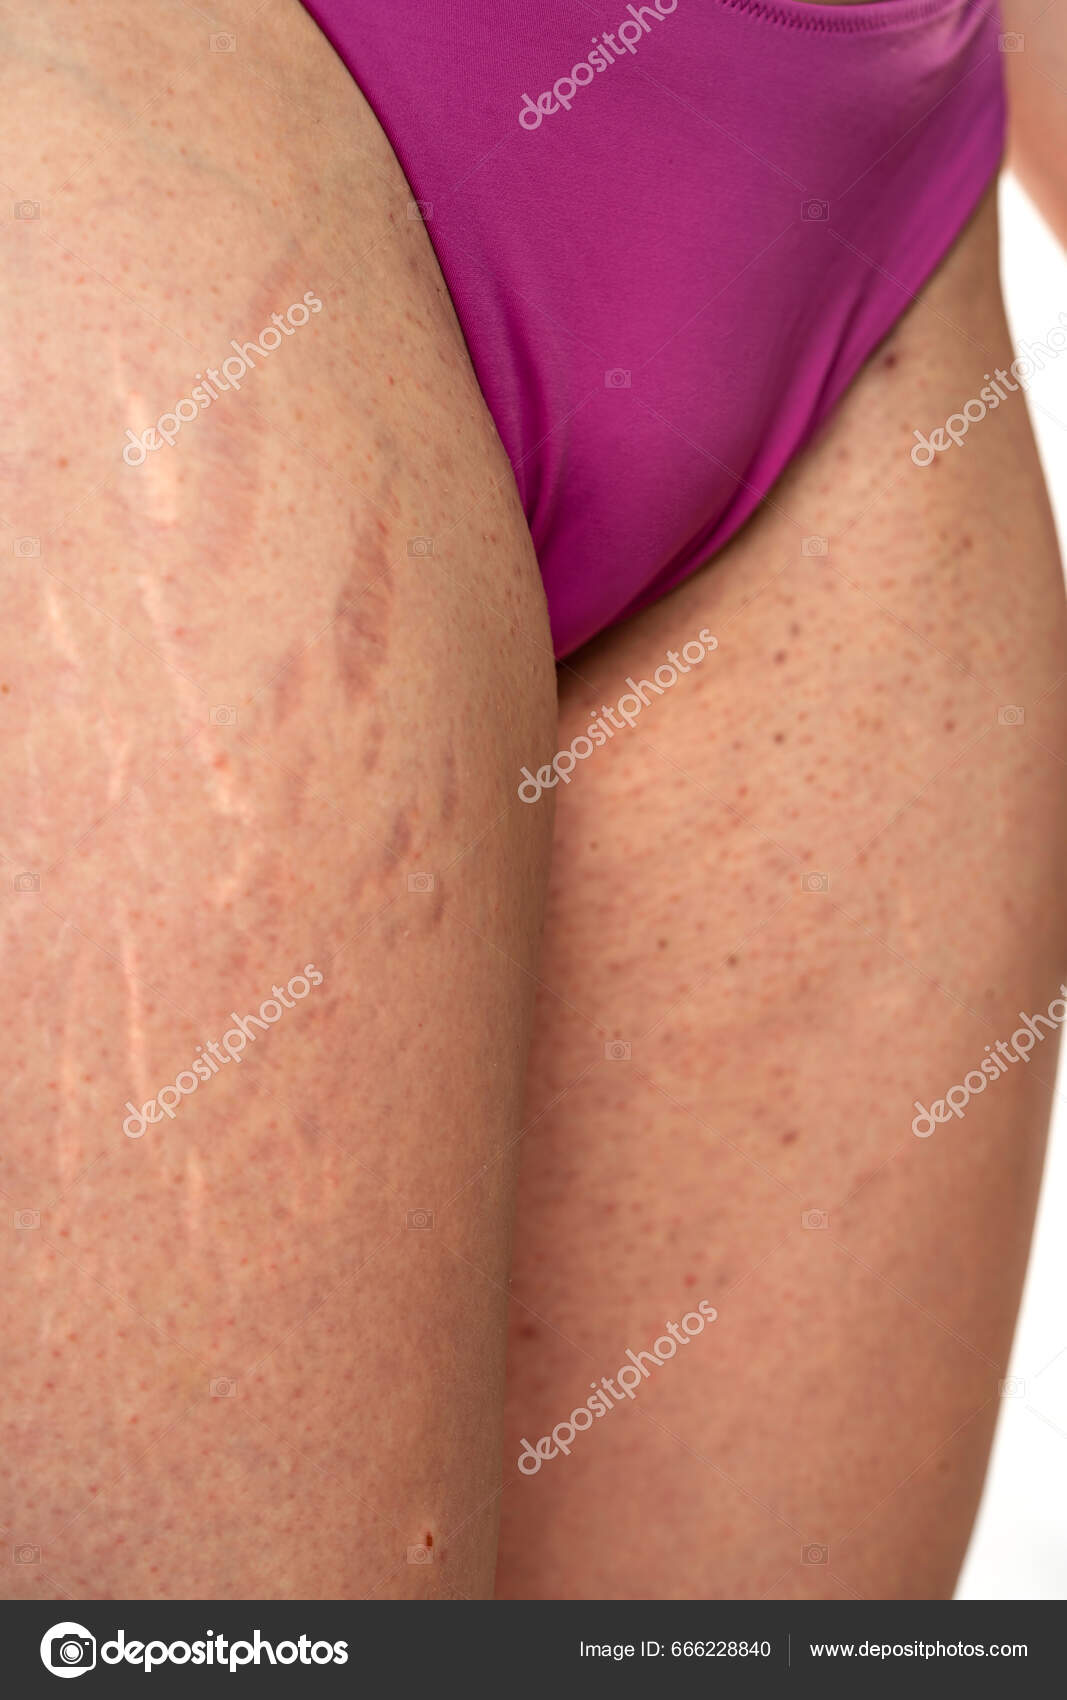 https://st5.depositphotos.com/1912333/66622/i/1600/depositphotos_666228840-stock-photo-female-hip-stretch-marks-groin.jpg